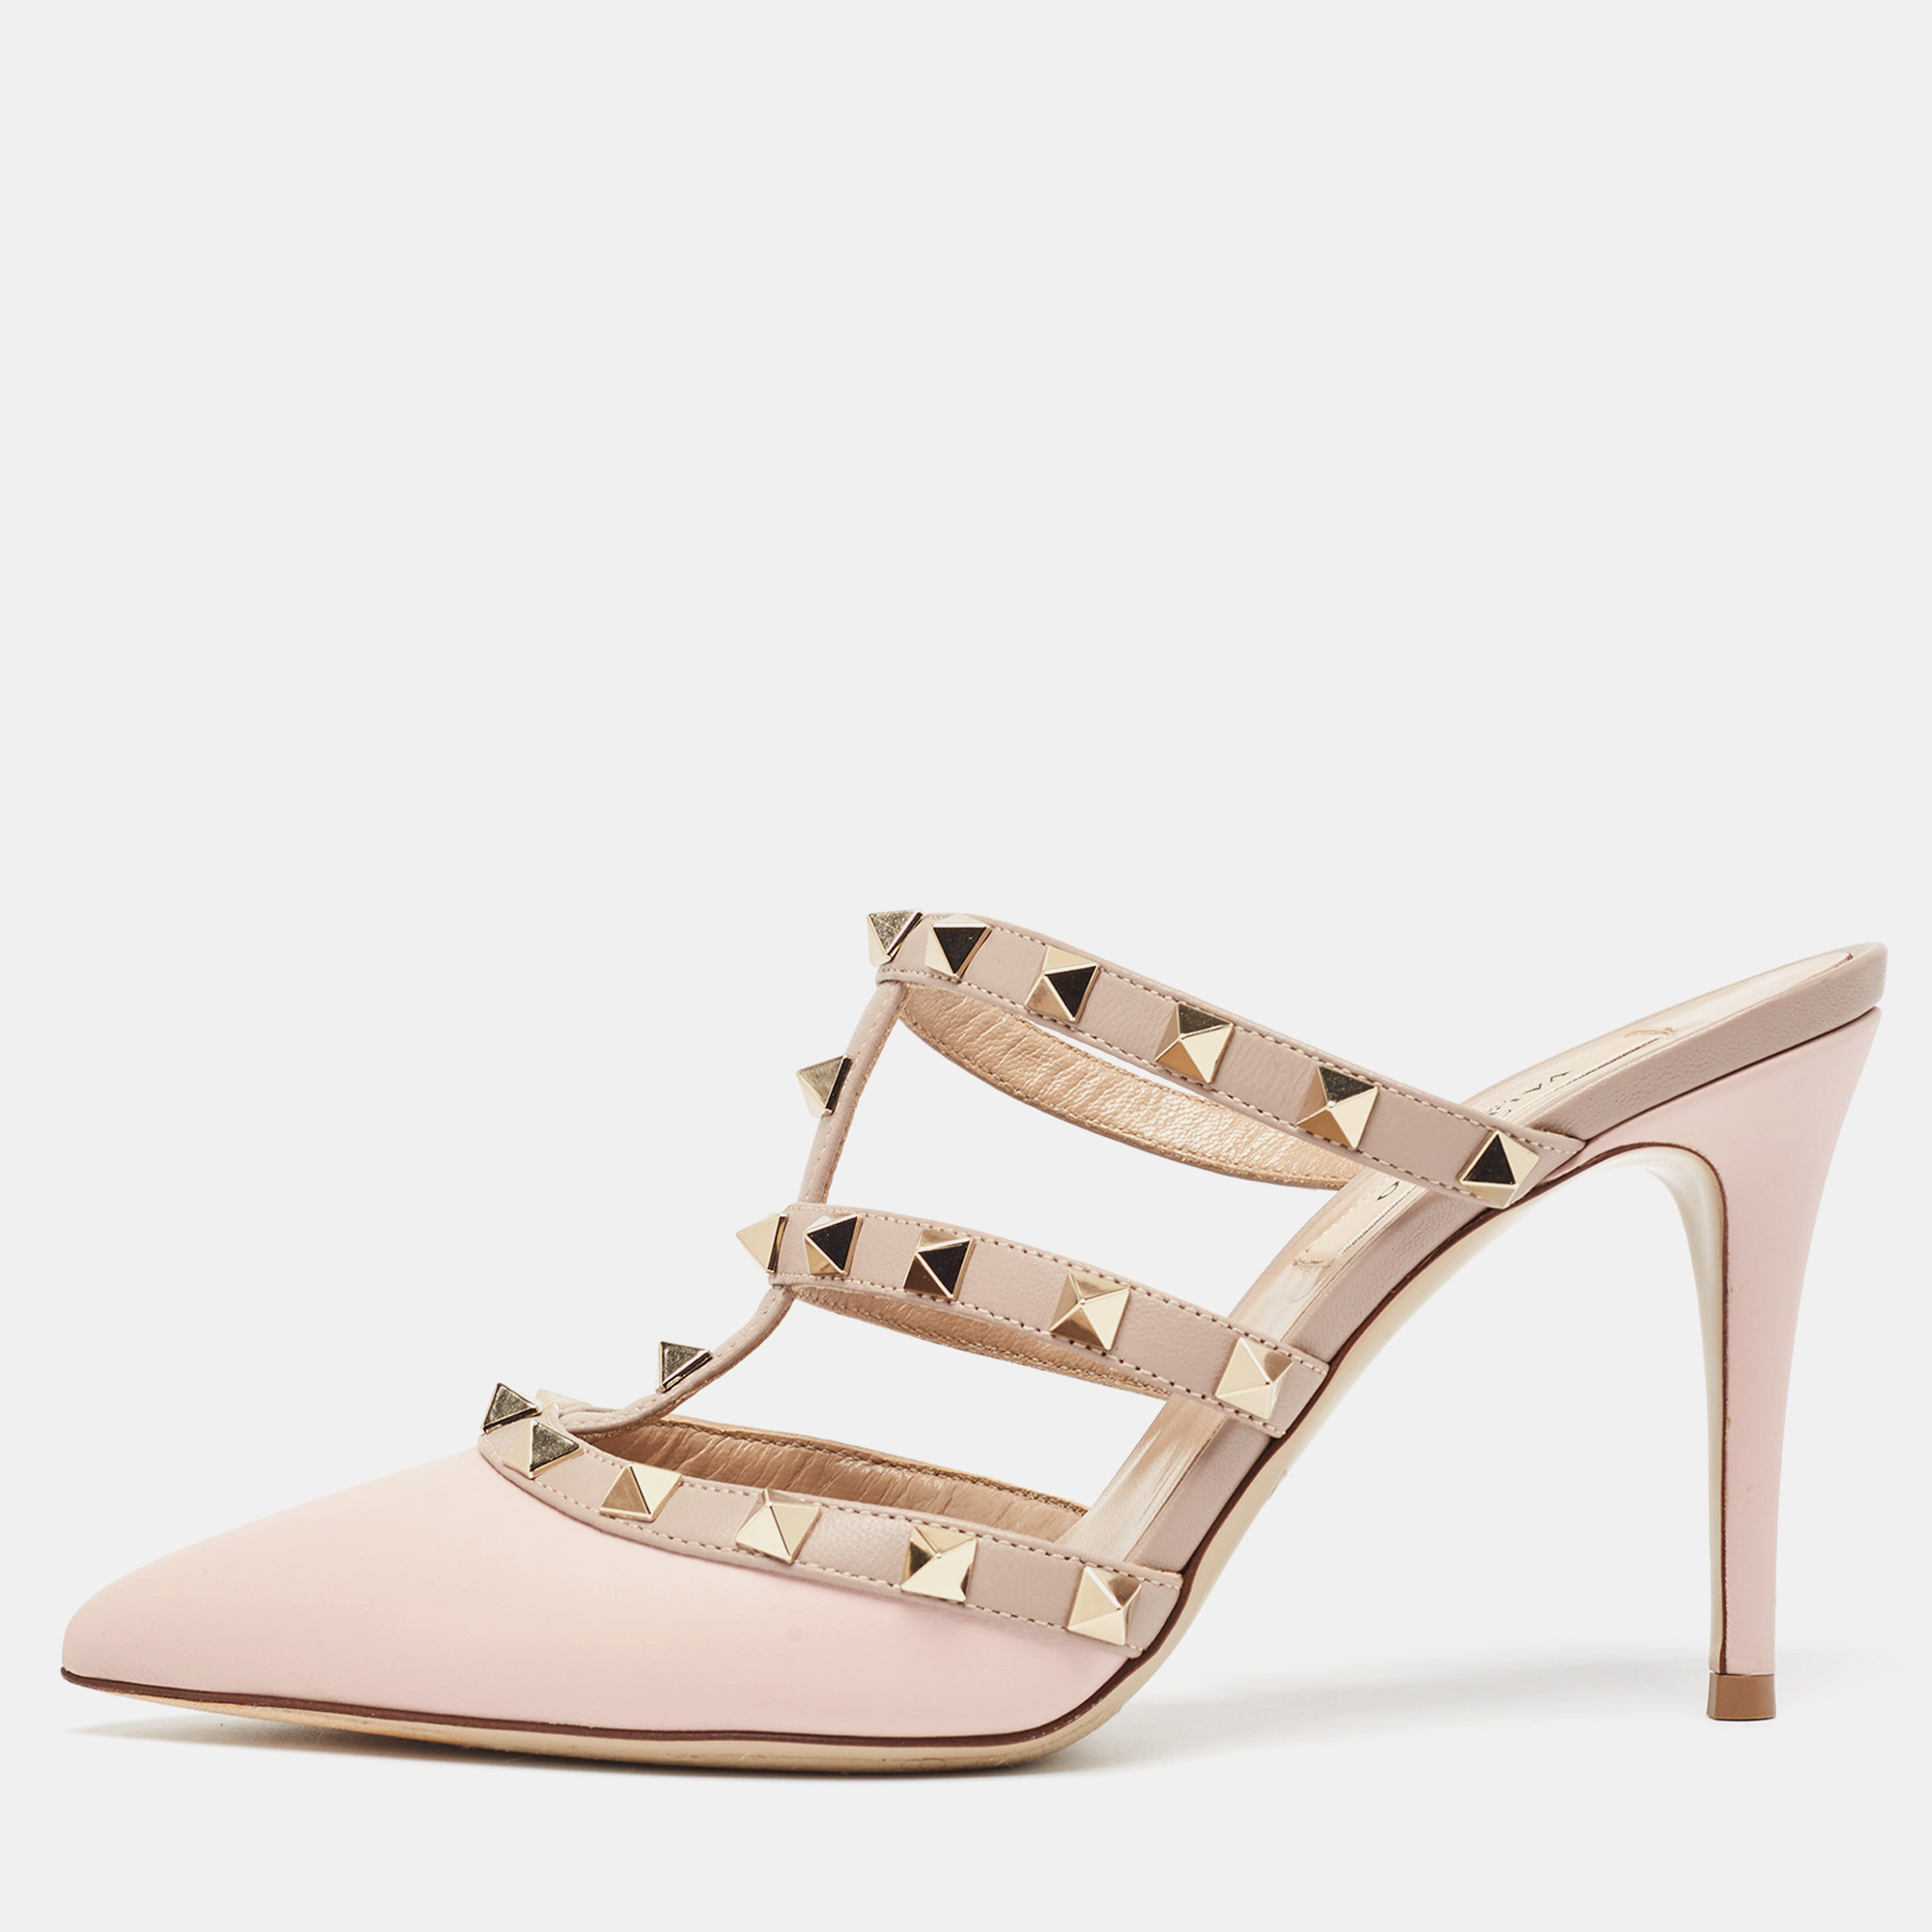 Valentino pink/beige leather rockstud mule sandals size 36